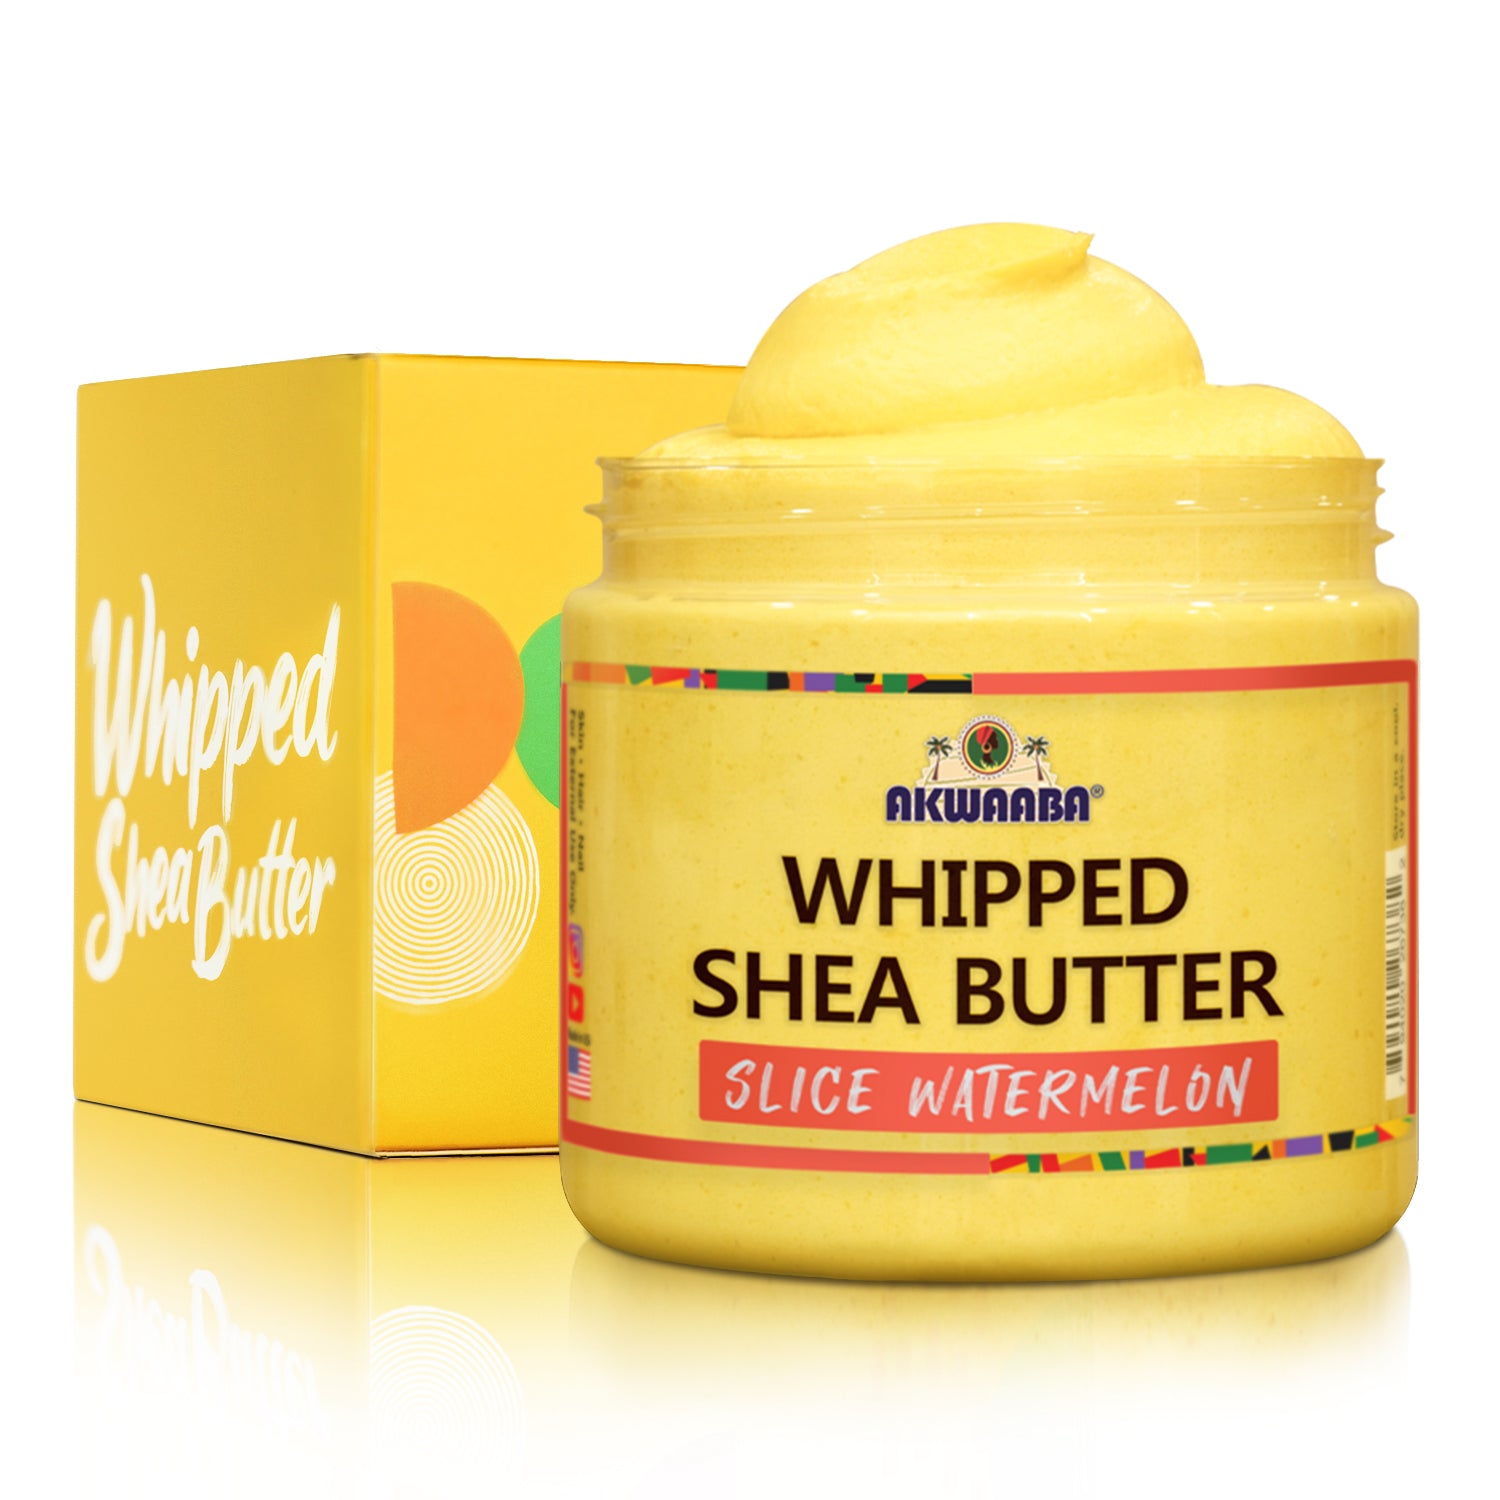 Whipped Shea Butter(Slice Watemelon) - 12 oz.